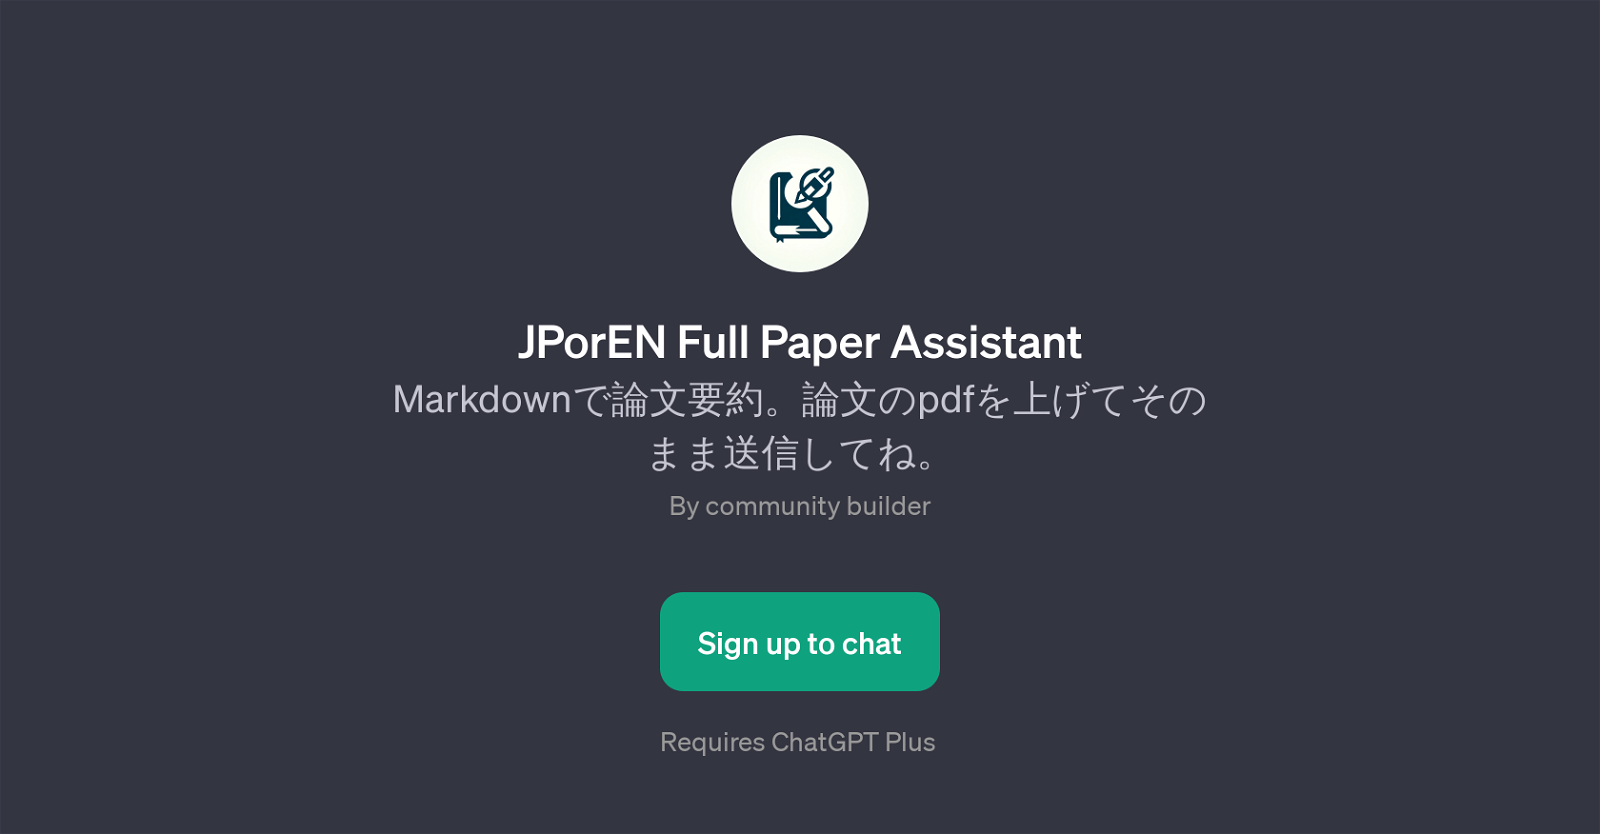 JPorEN Full Paper Assistant website